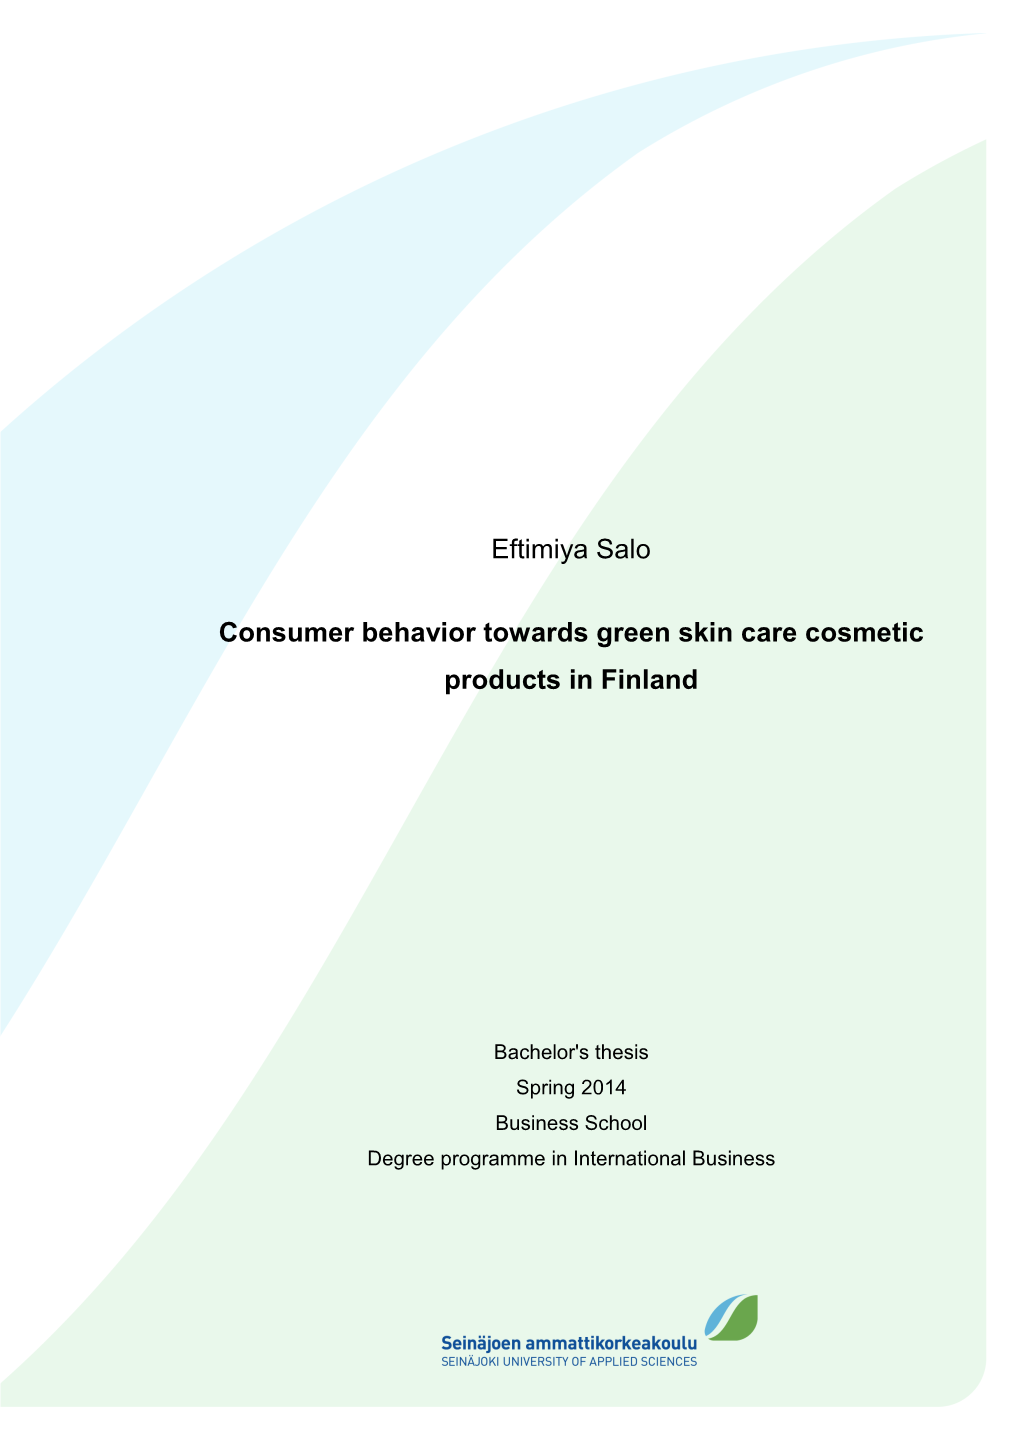 Eftimiya Salo Consumer Behavior Towards Green Skin